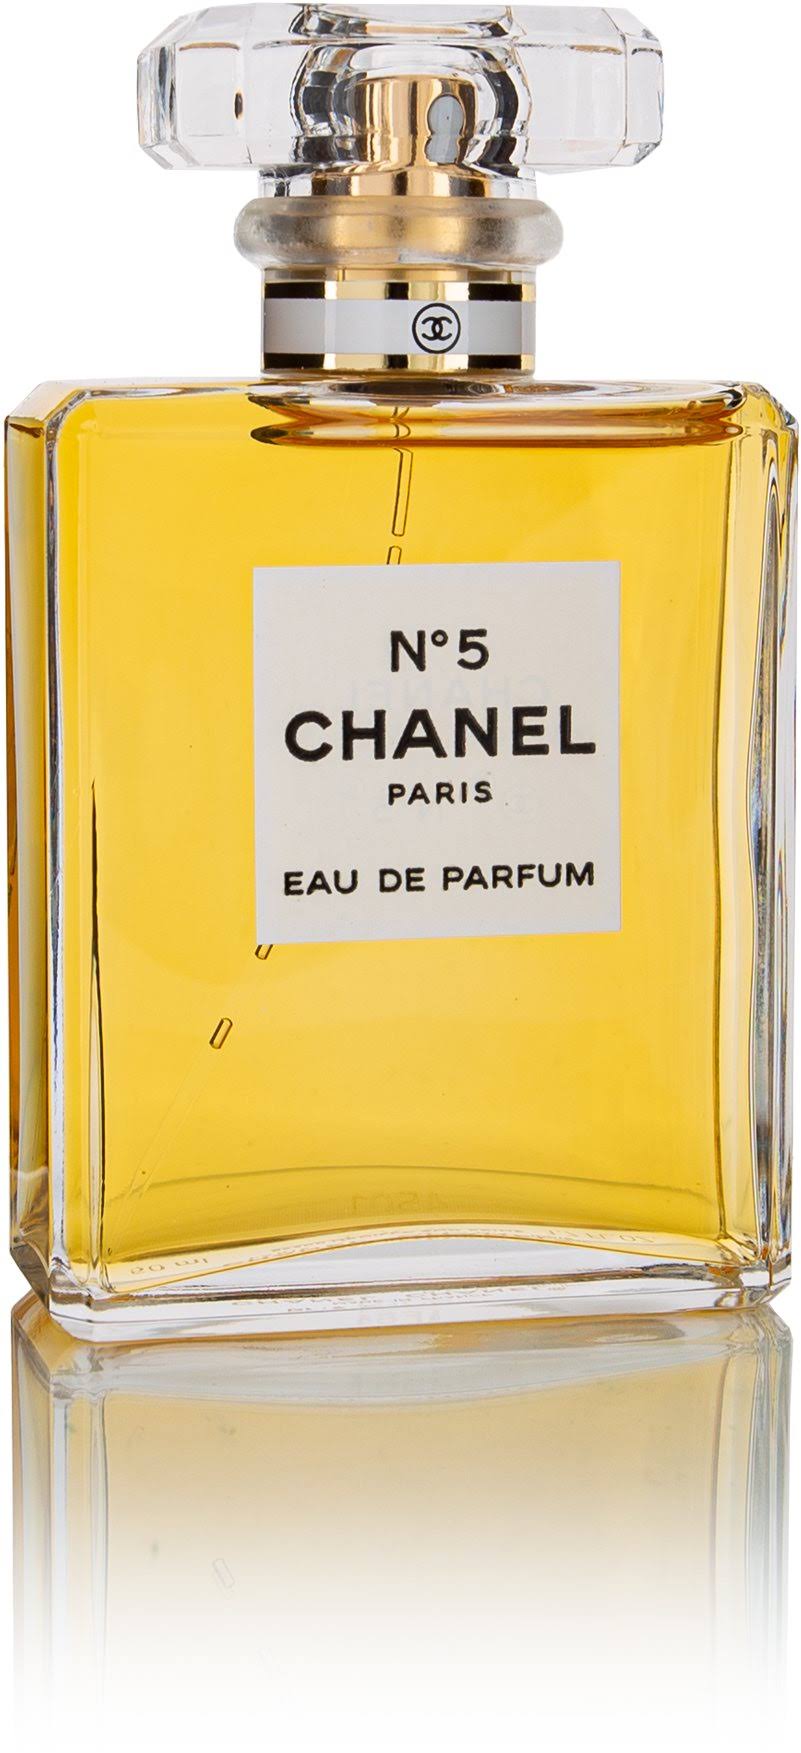 Chanel No.5 for Women Eau de Parfum Spray - 50ml